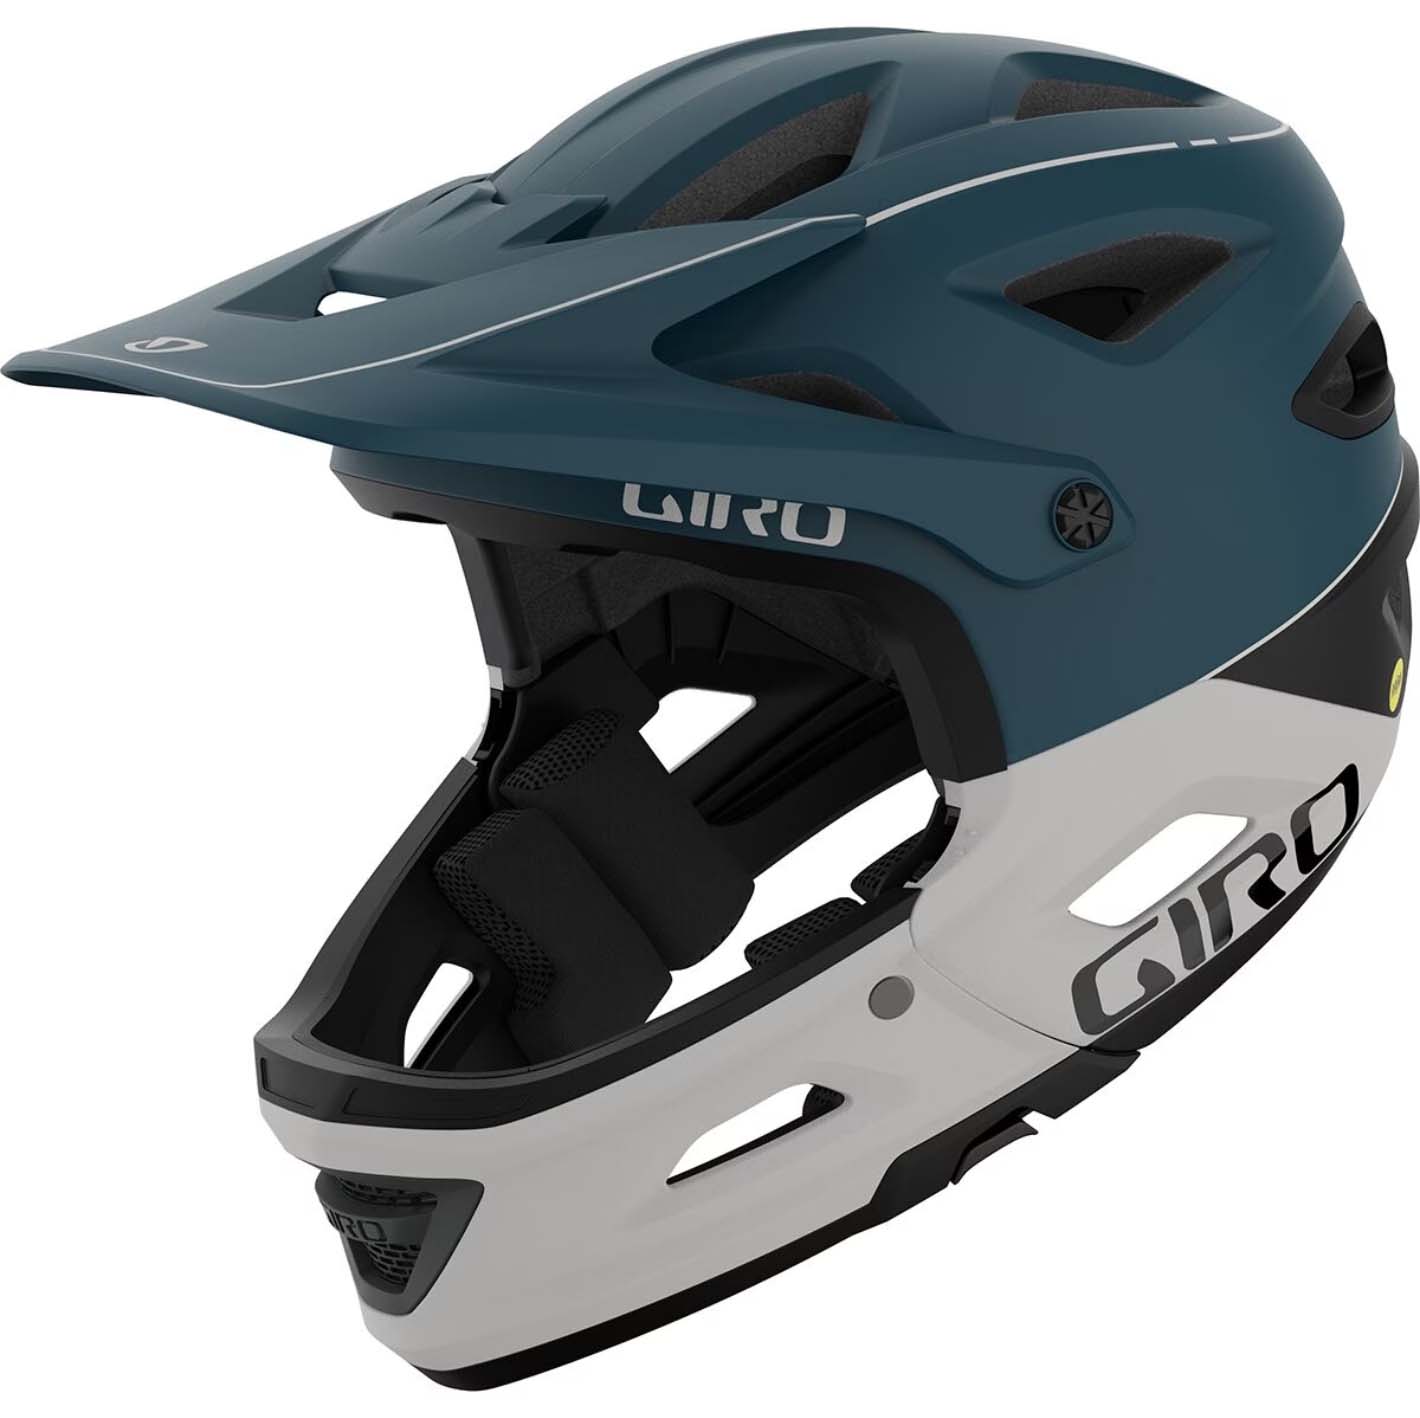 Giro Switchblade MIPS mountain bike helmet